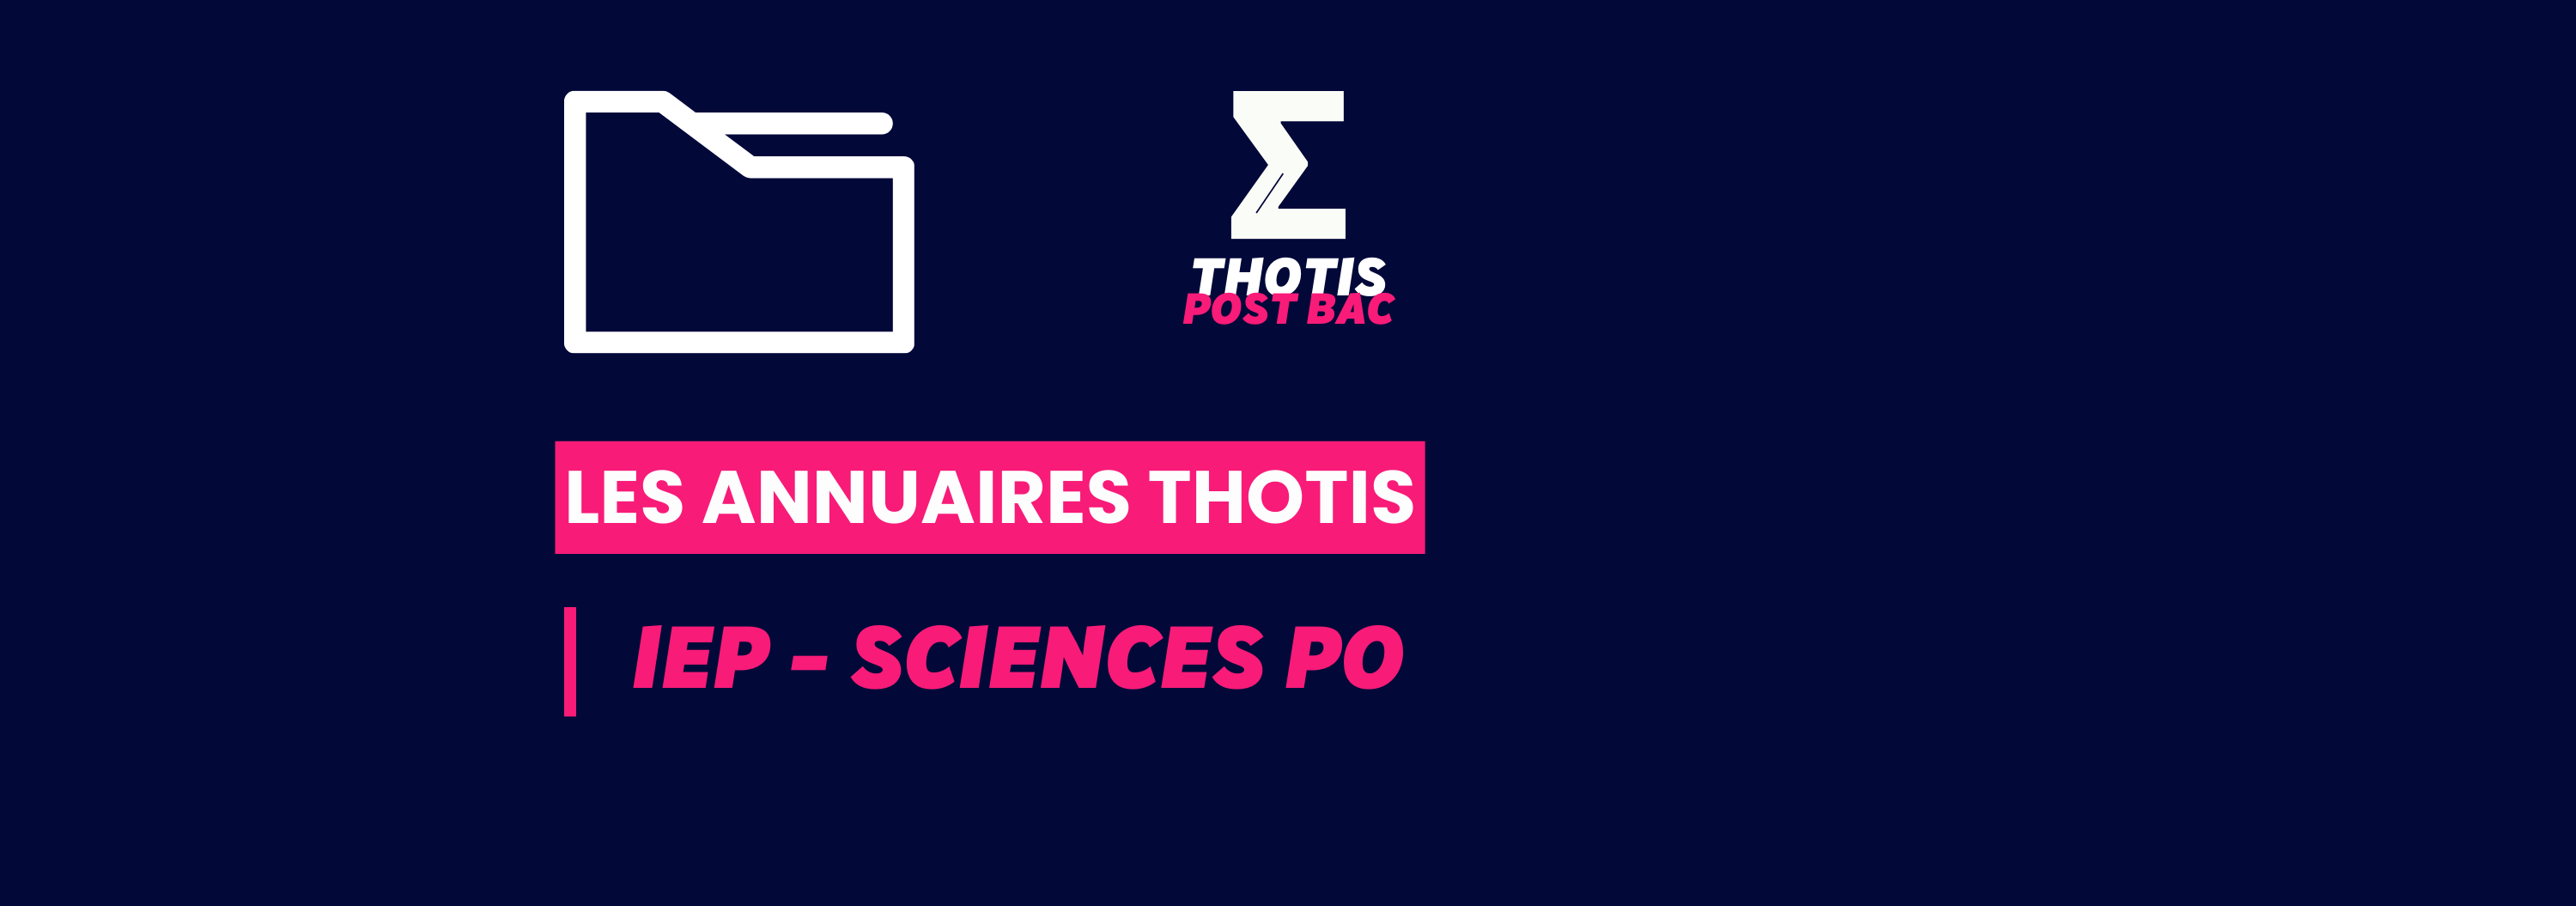 IEP_Sciences_po_Annuaire_Thotis